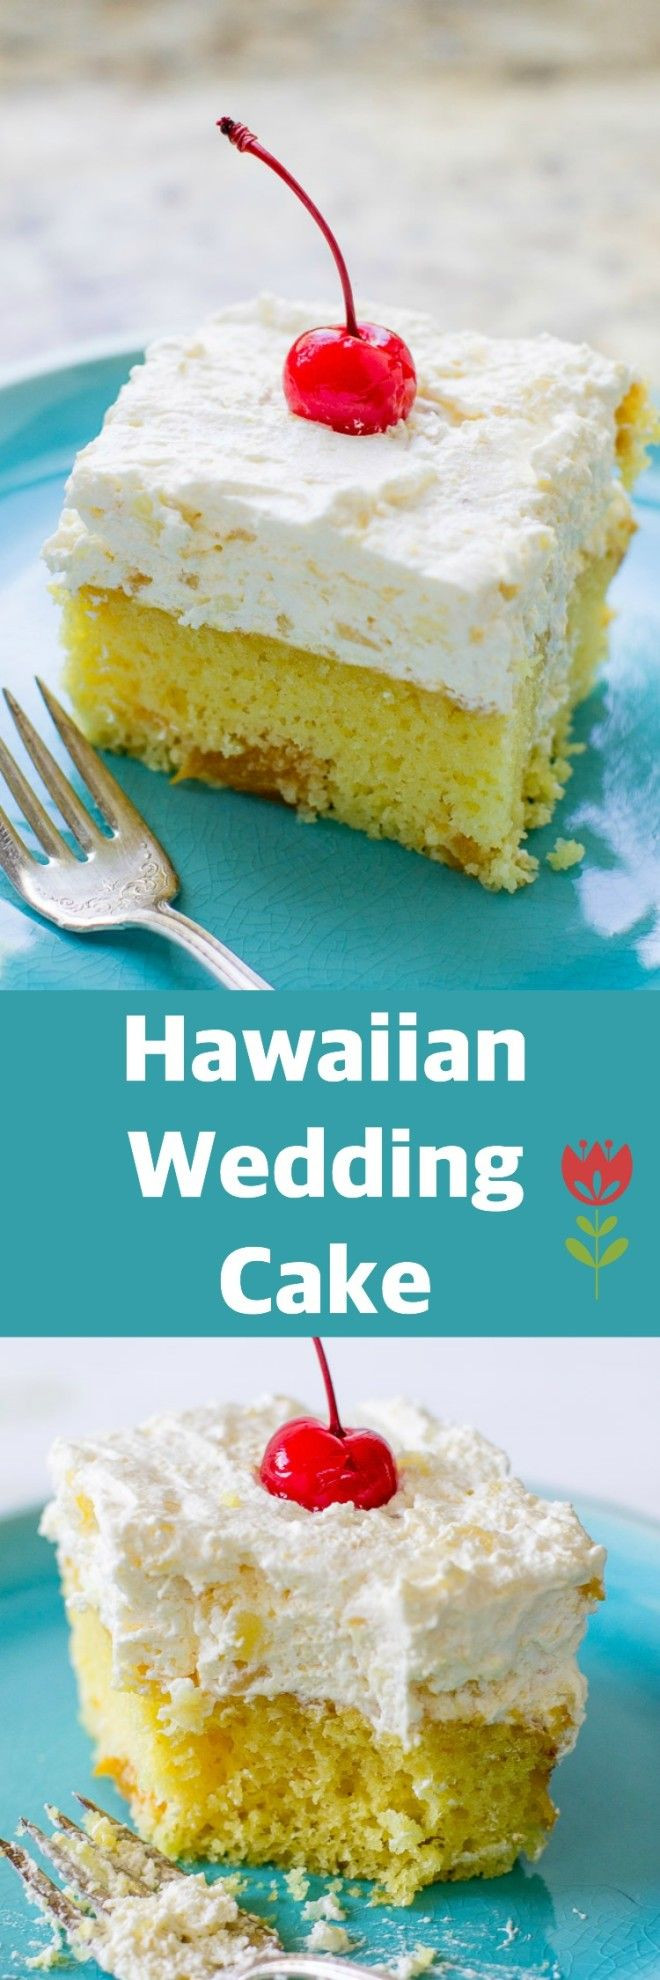 Recipe For Hawaiian Wedding Cake
 royal hawaiian wedding cake recipe